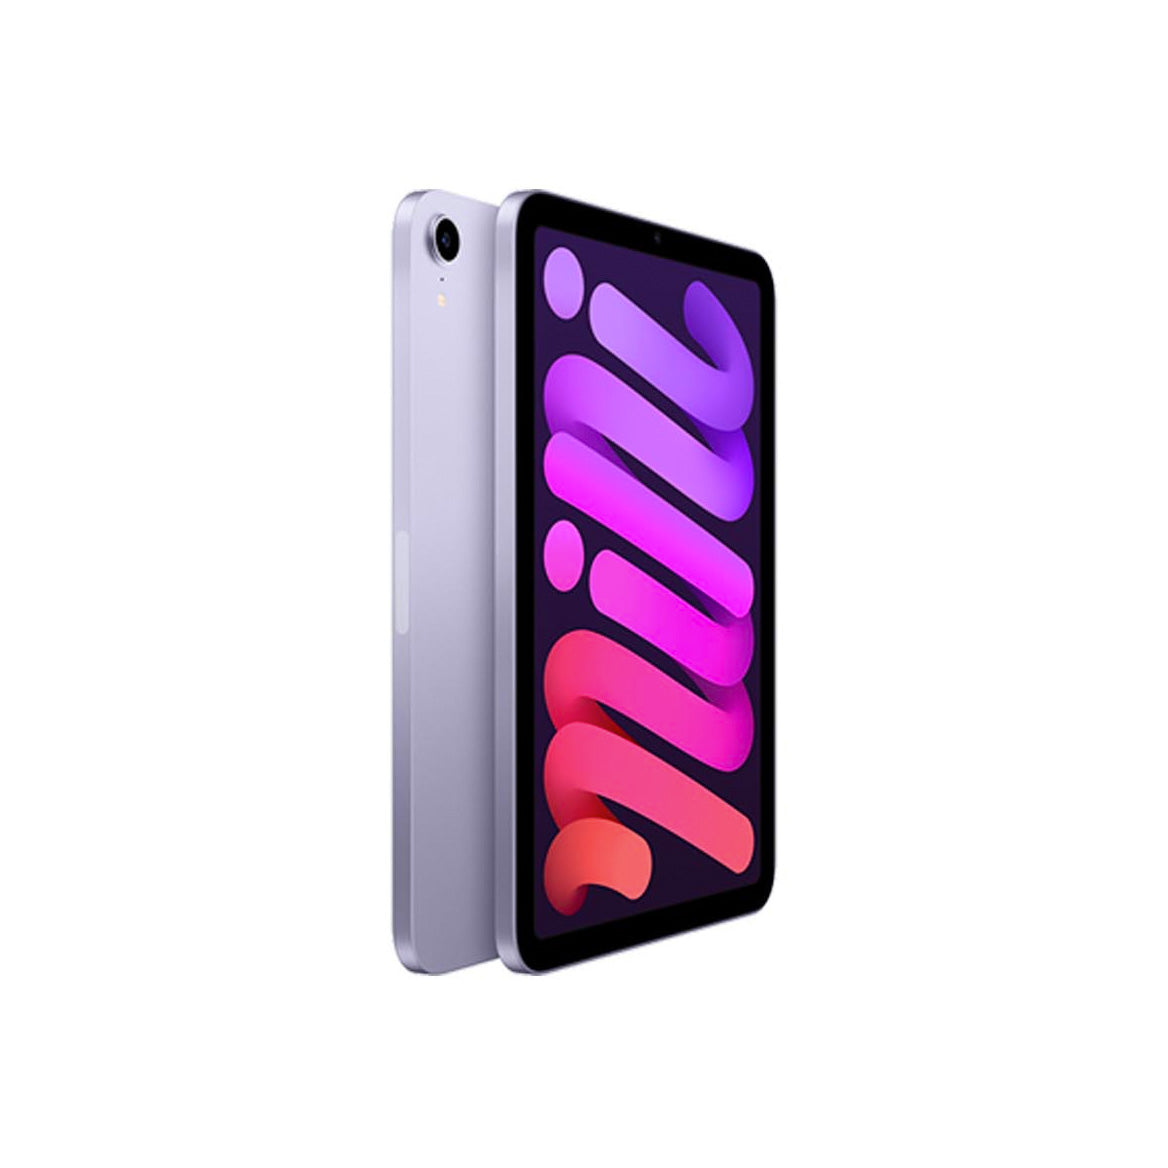 iPad mini Gen 6 purple side view